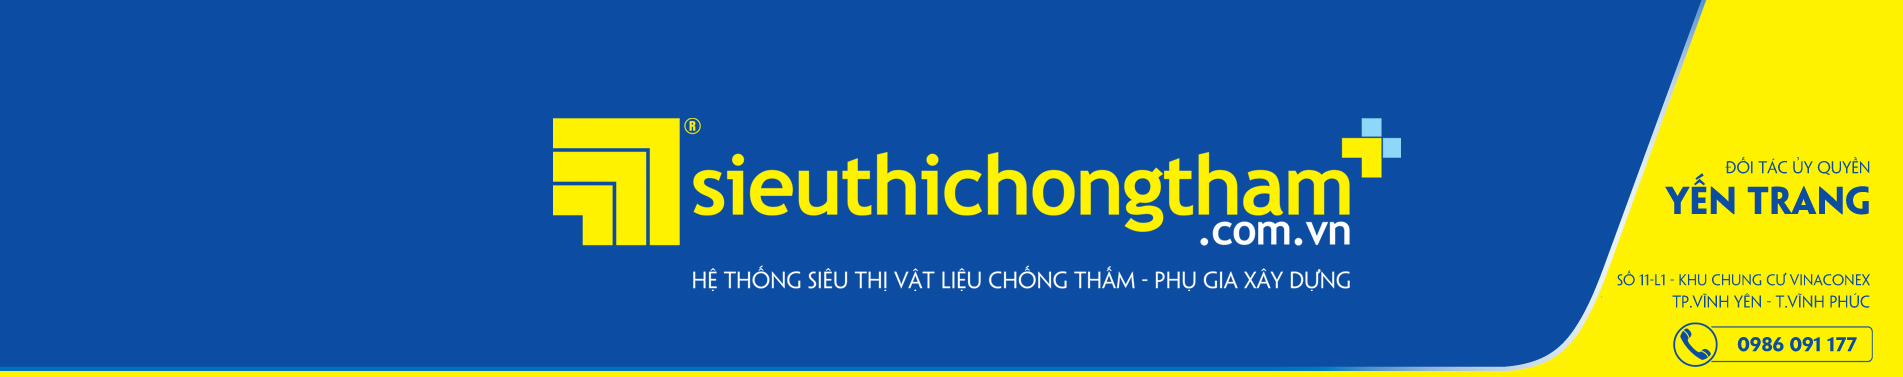 Yen Trang Banner